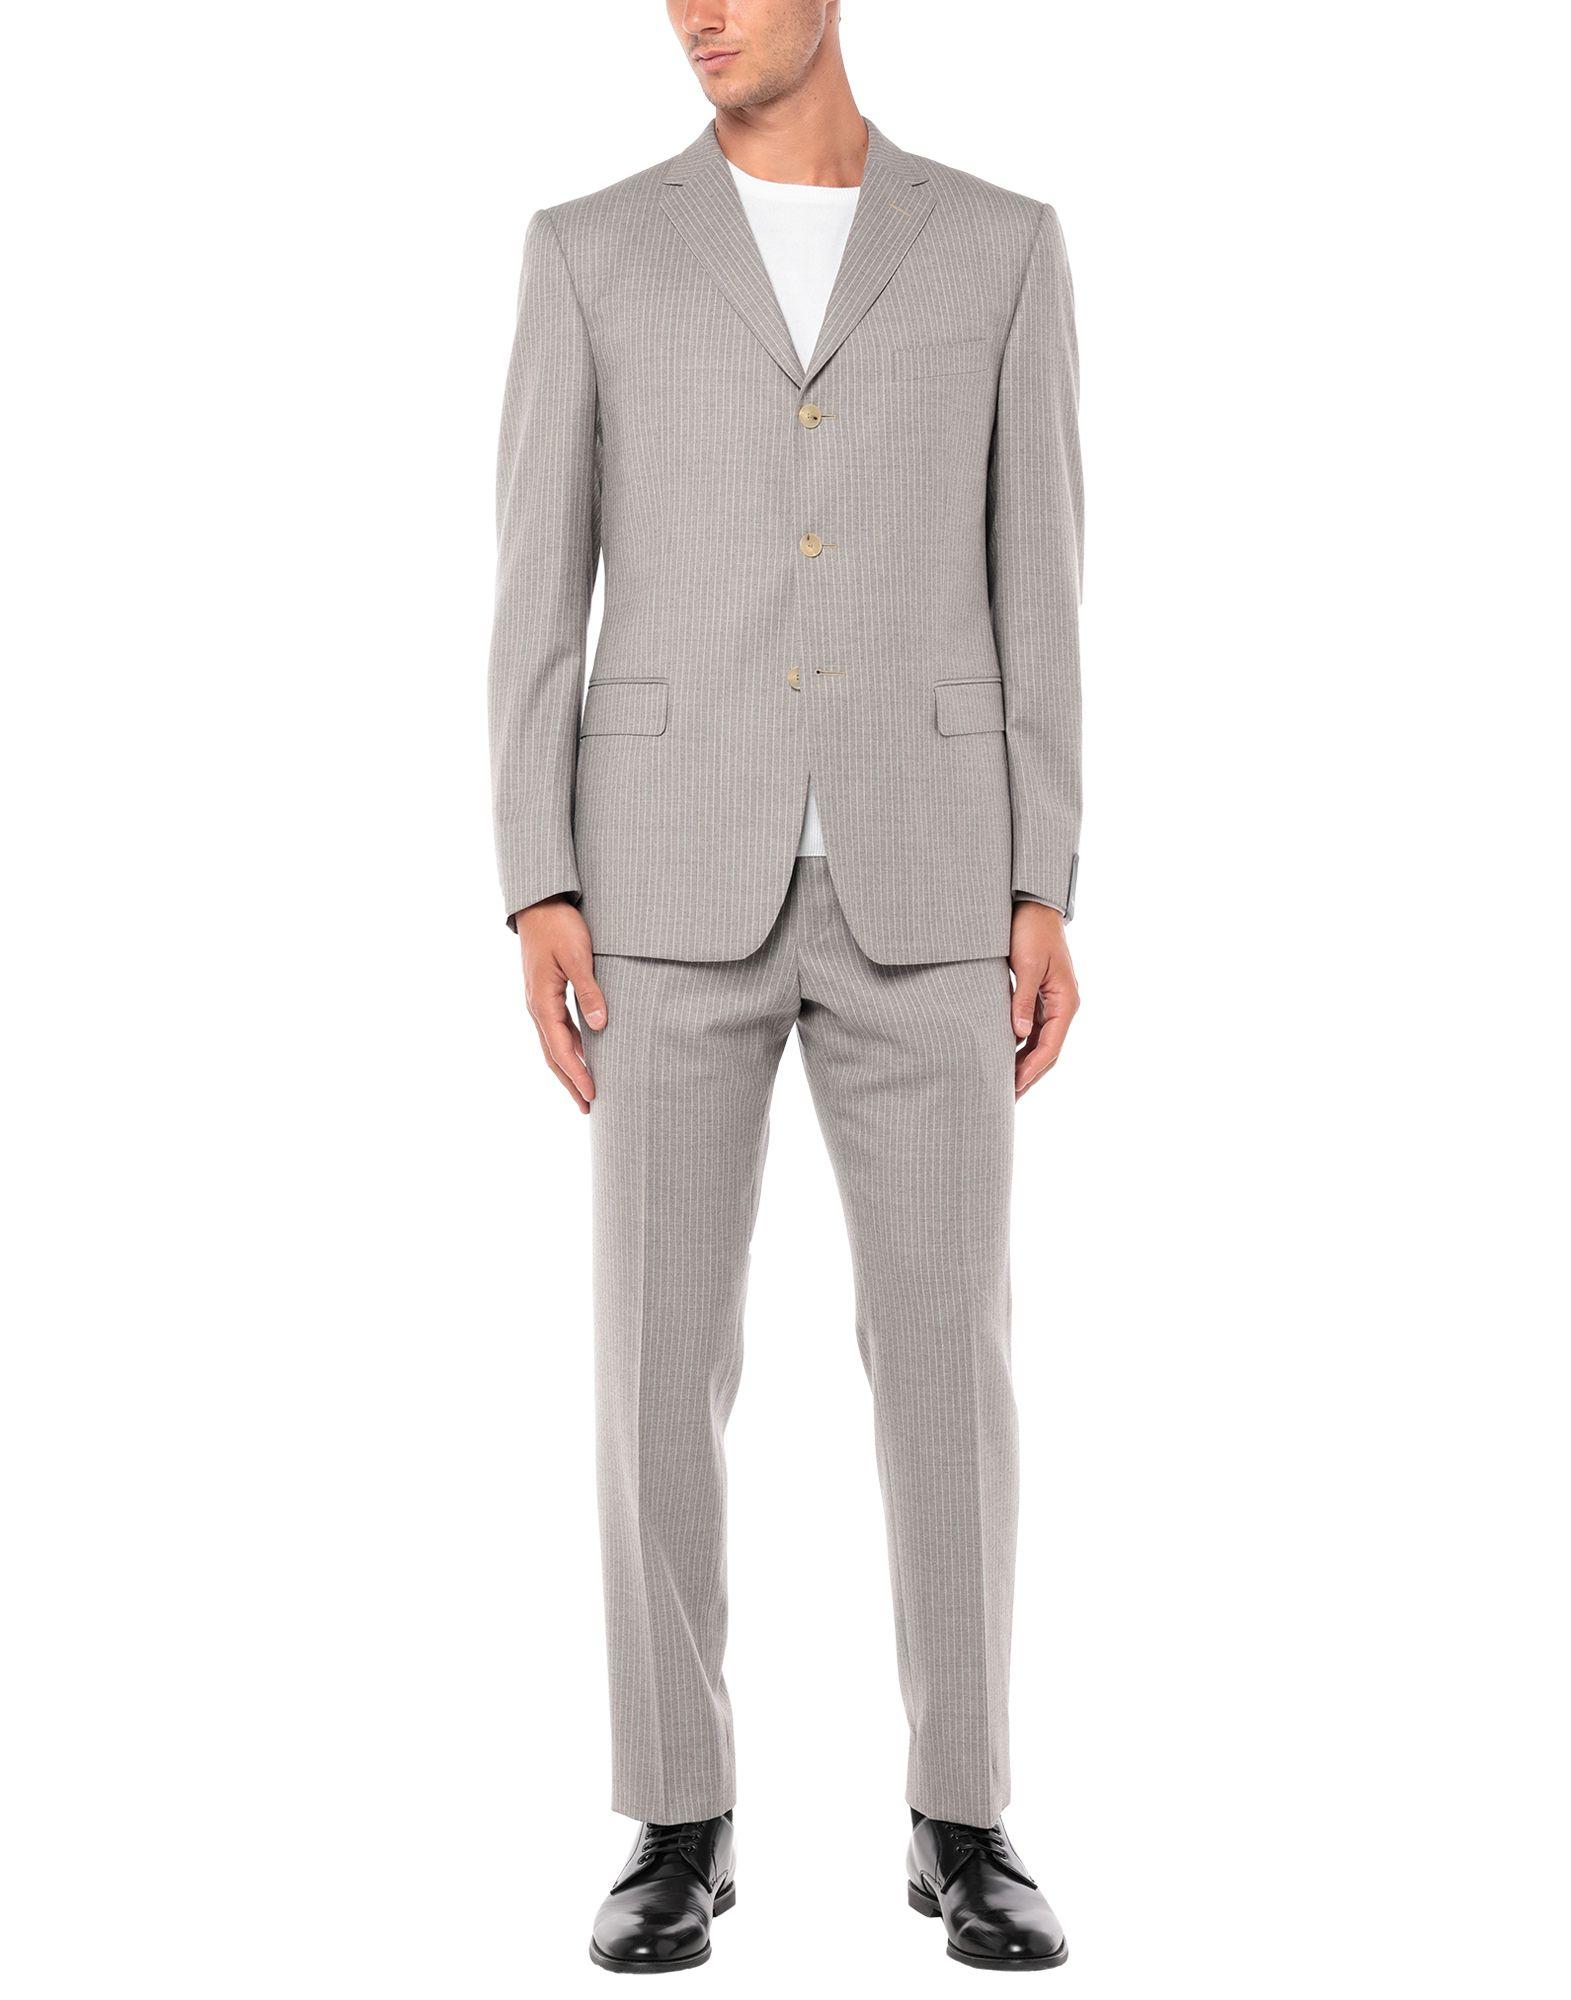 Z Zegna Flannel Suit in Light Grey (Gray) for Men - Lyst